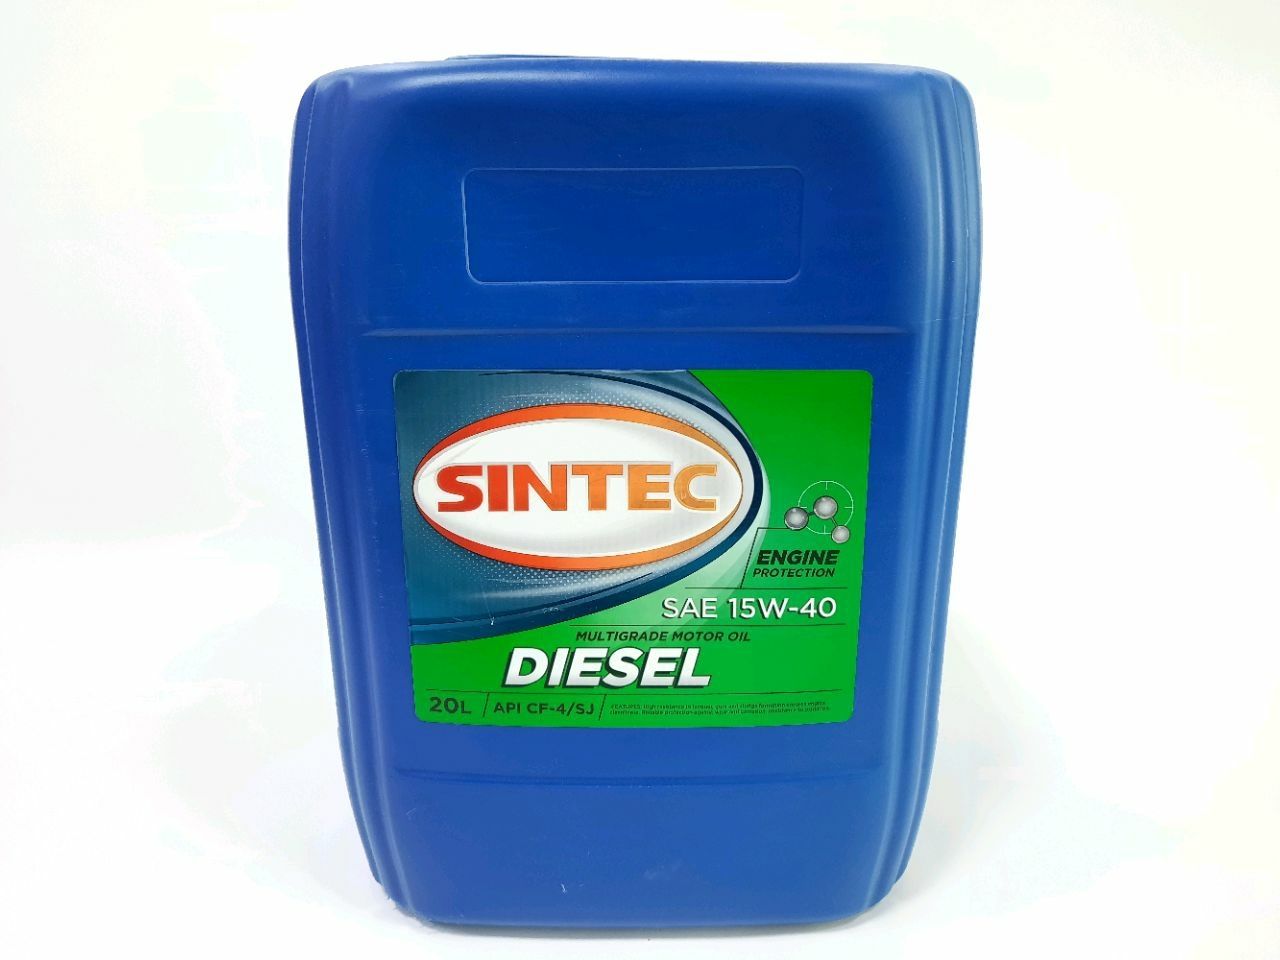 Дизельные масла cf. Sintec CF-4 15w-40 20л. Sintec 15w-40 Diesel. Sintec Diesel SAE 15w-40 API CF-4/SJ 20л. Sintec 15w40 Diesel артикул.